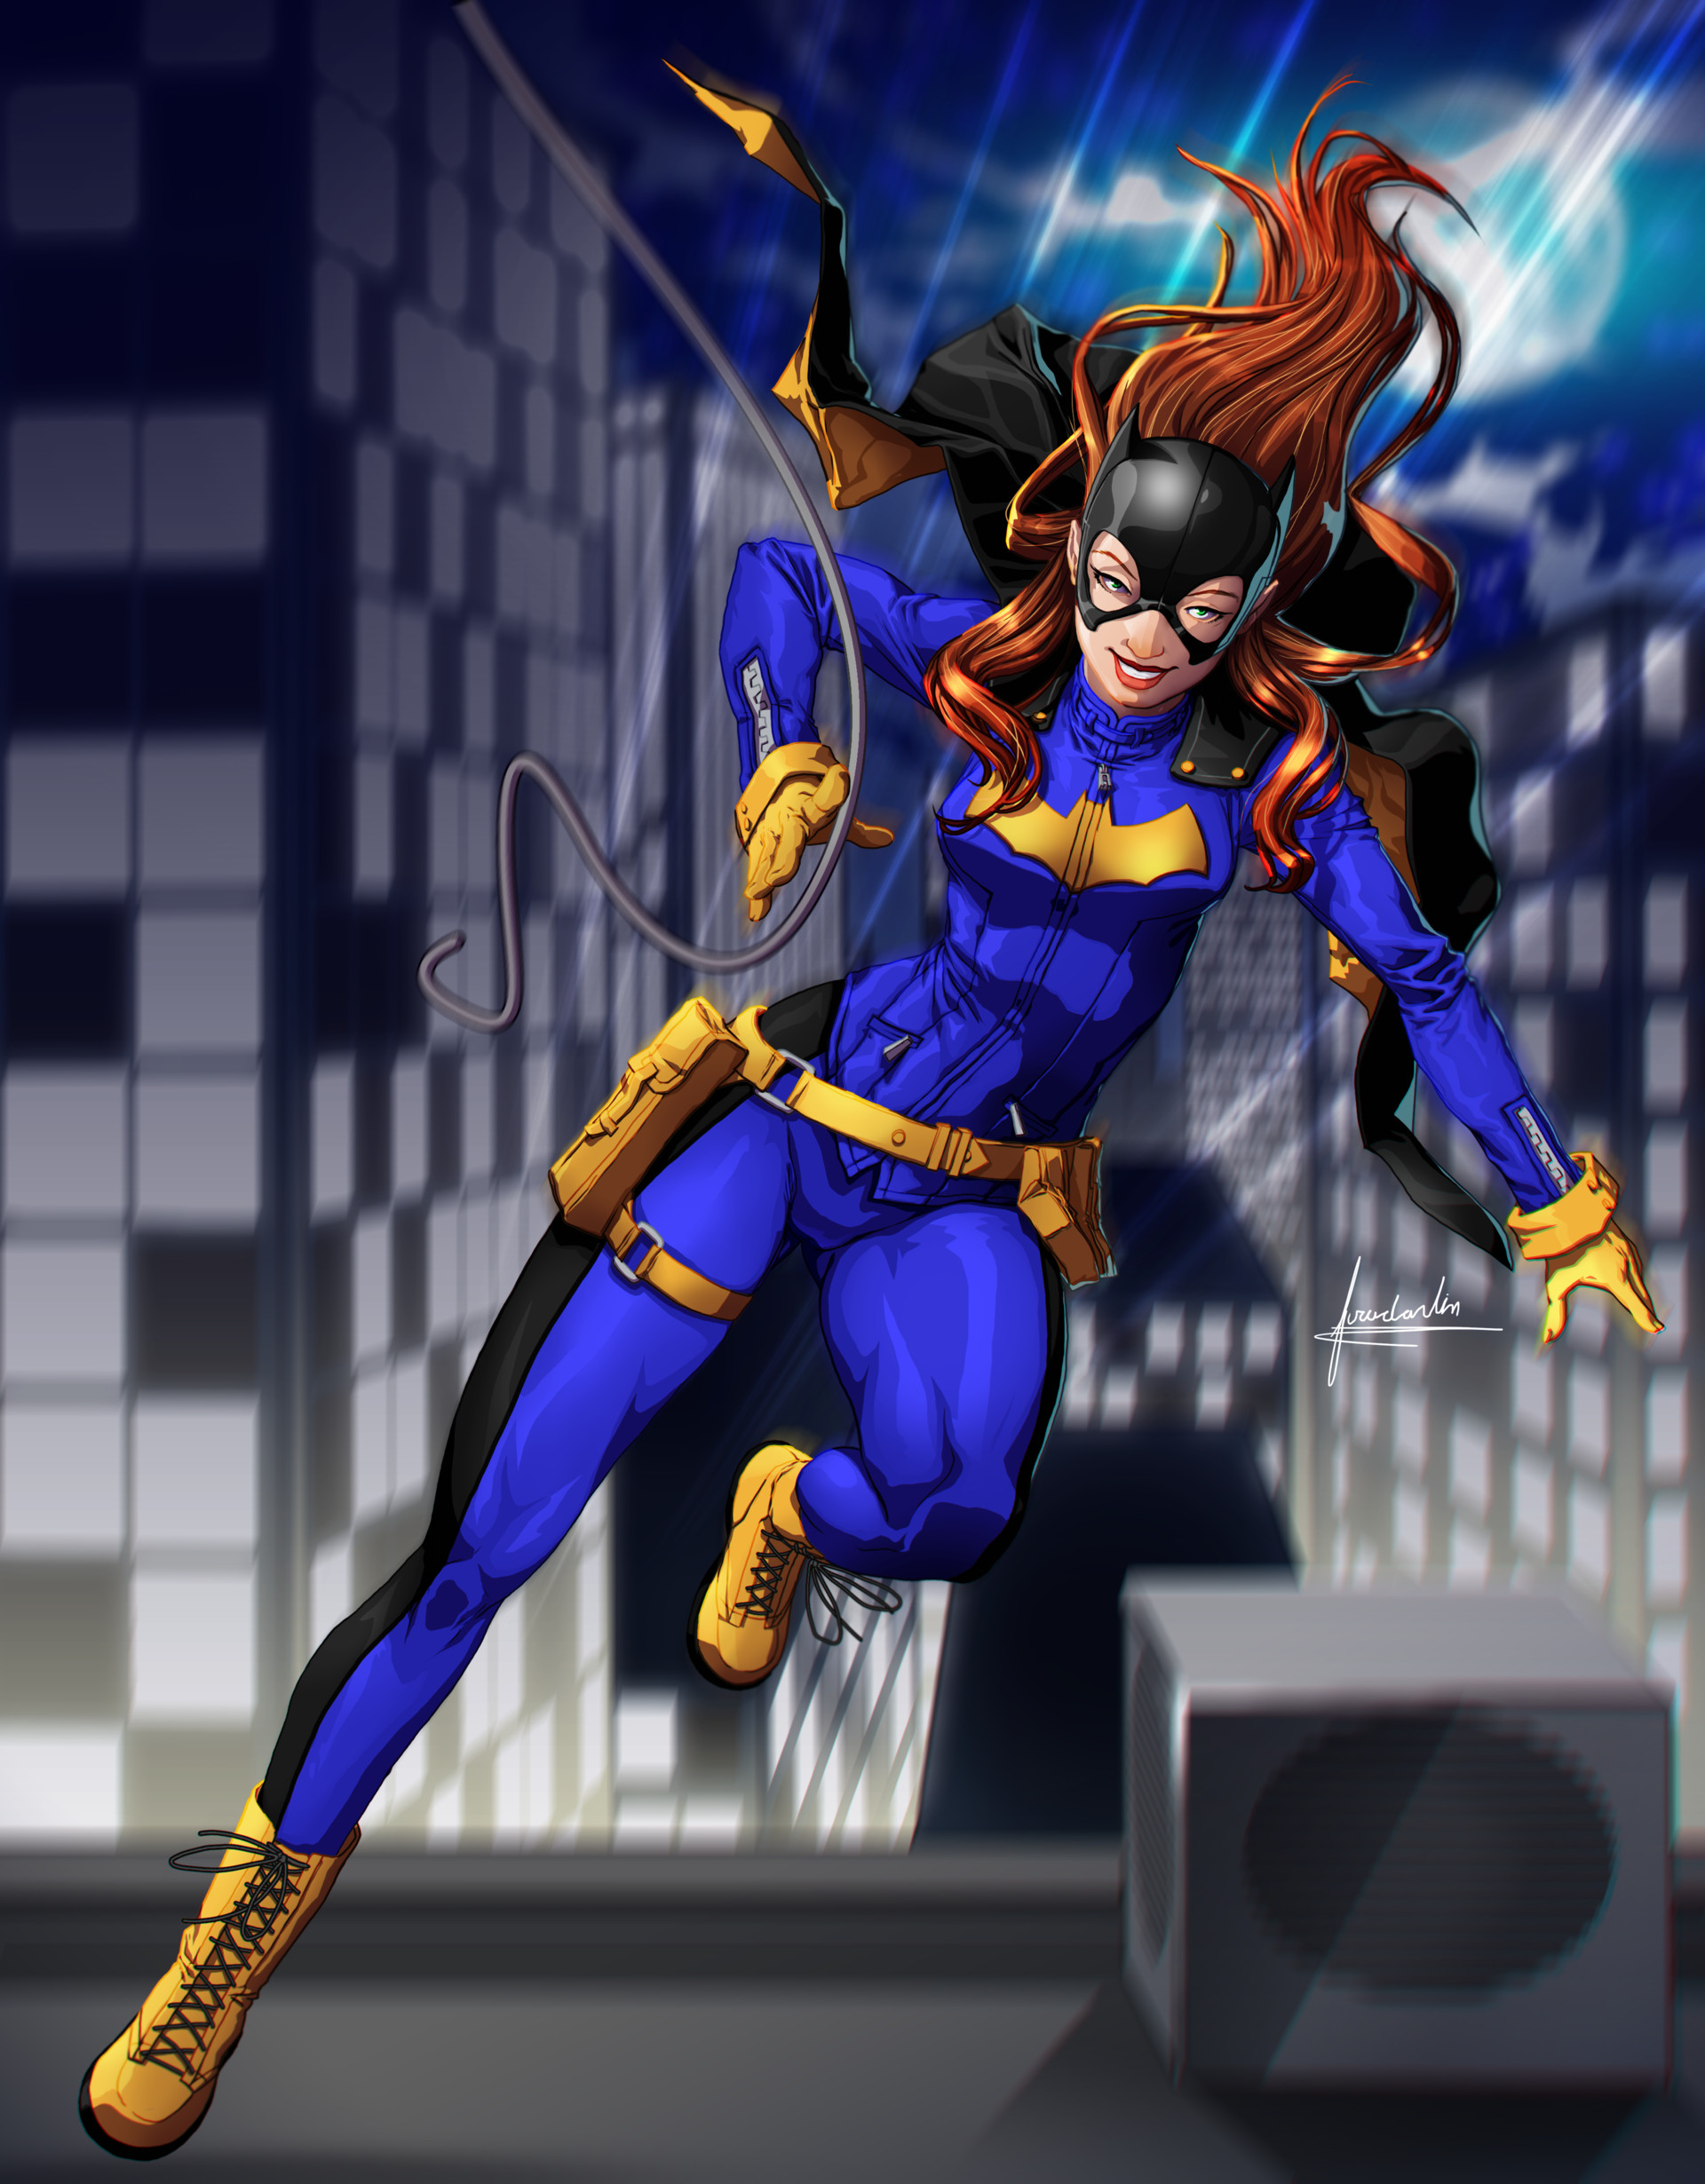 Fan art I did of Barbara Gordon aka Batgirl from Dc Comics.